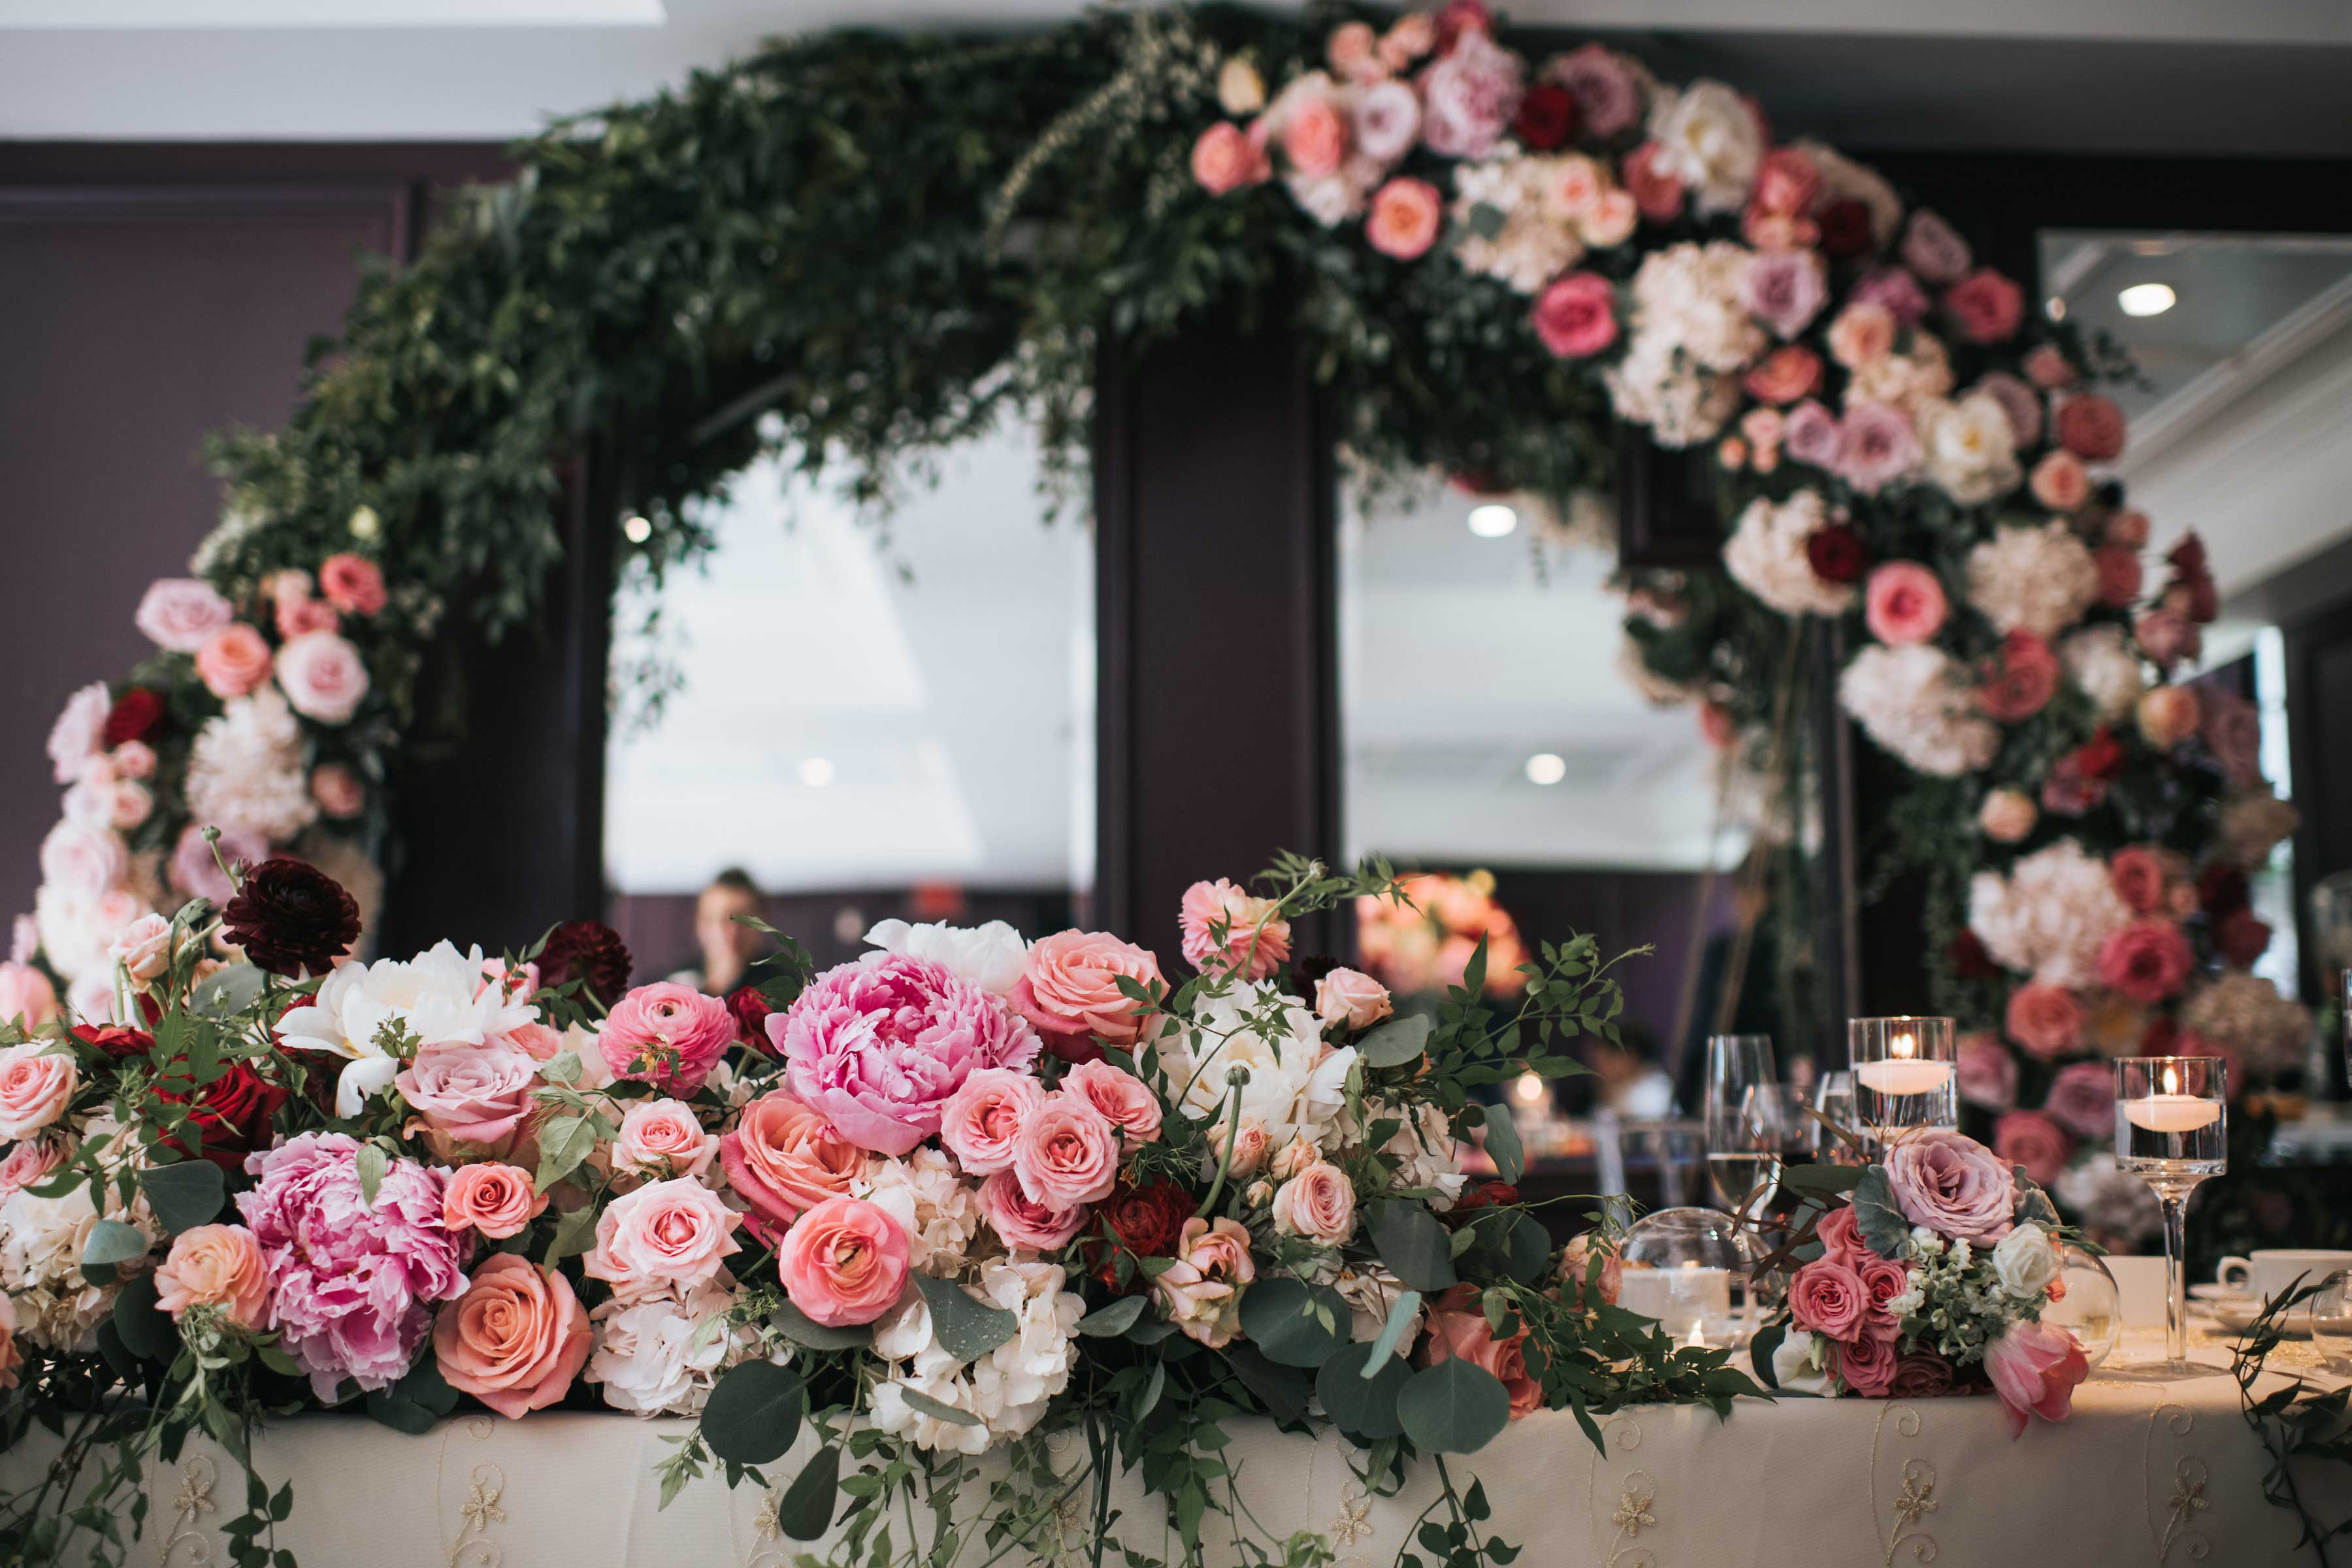 Bride & Groom table floral decorations